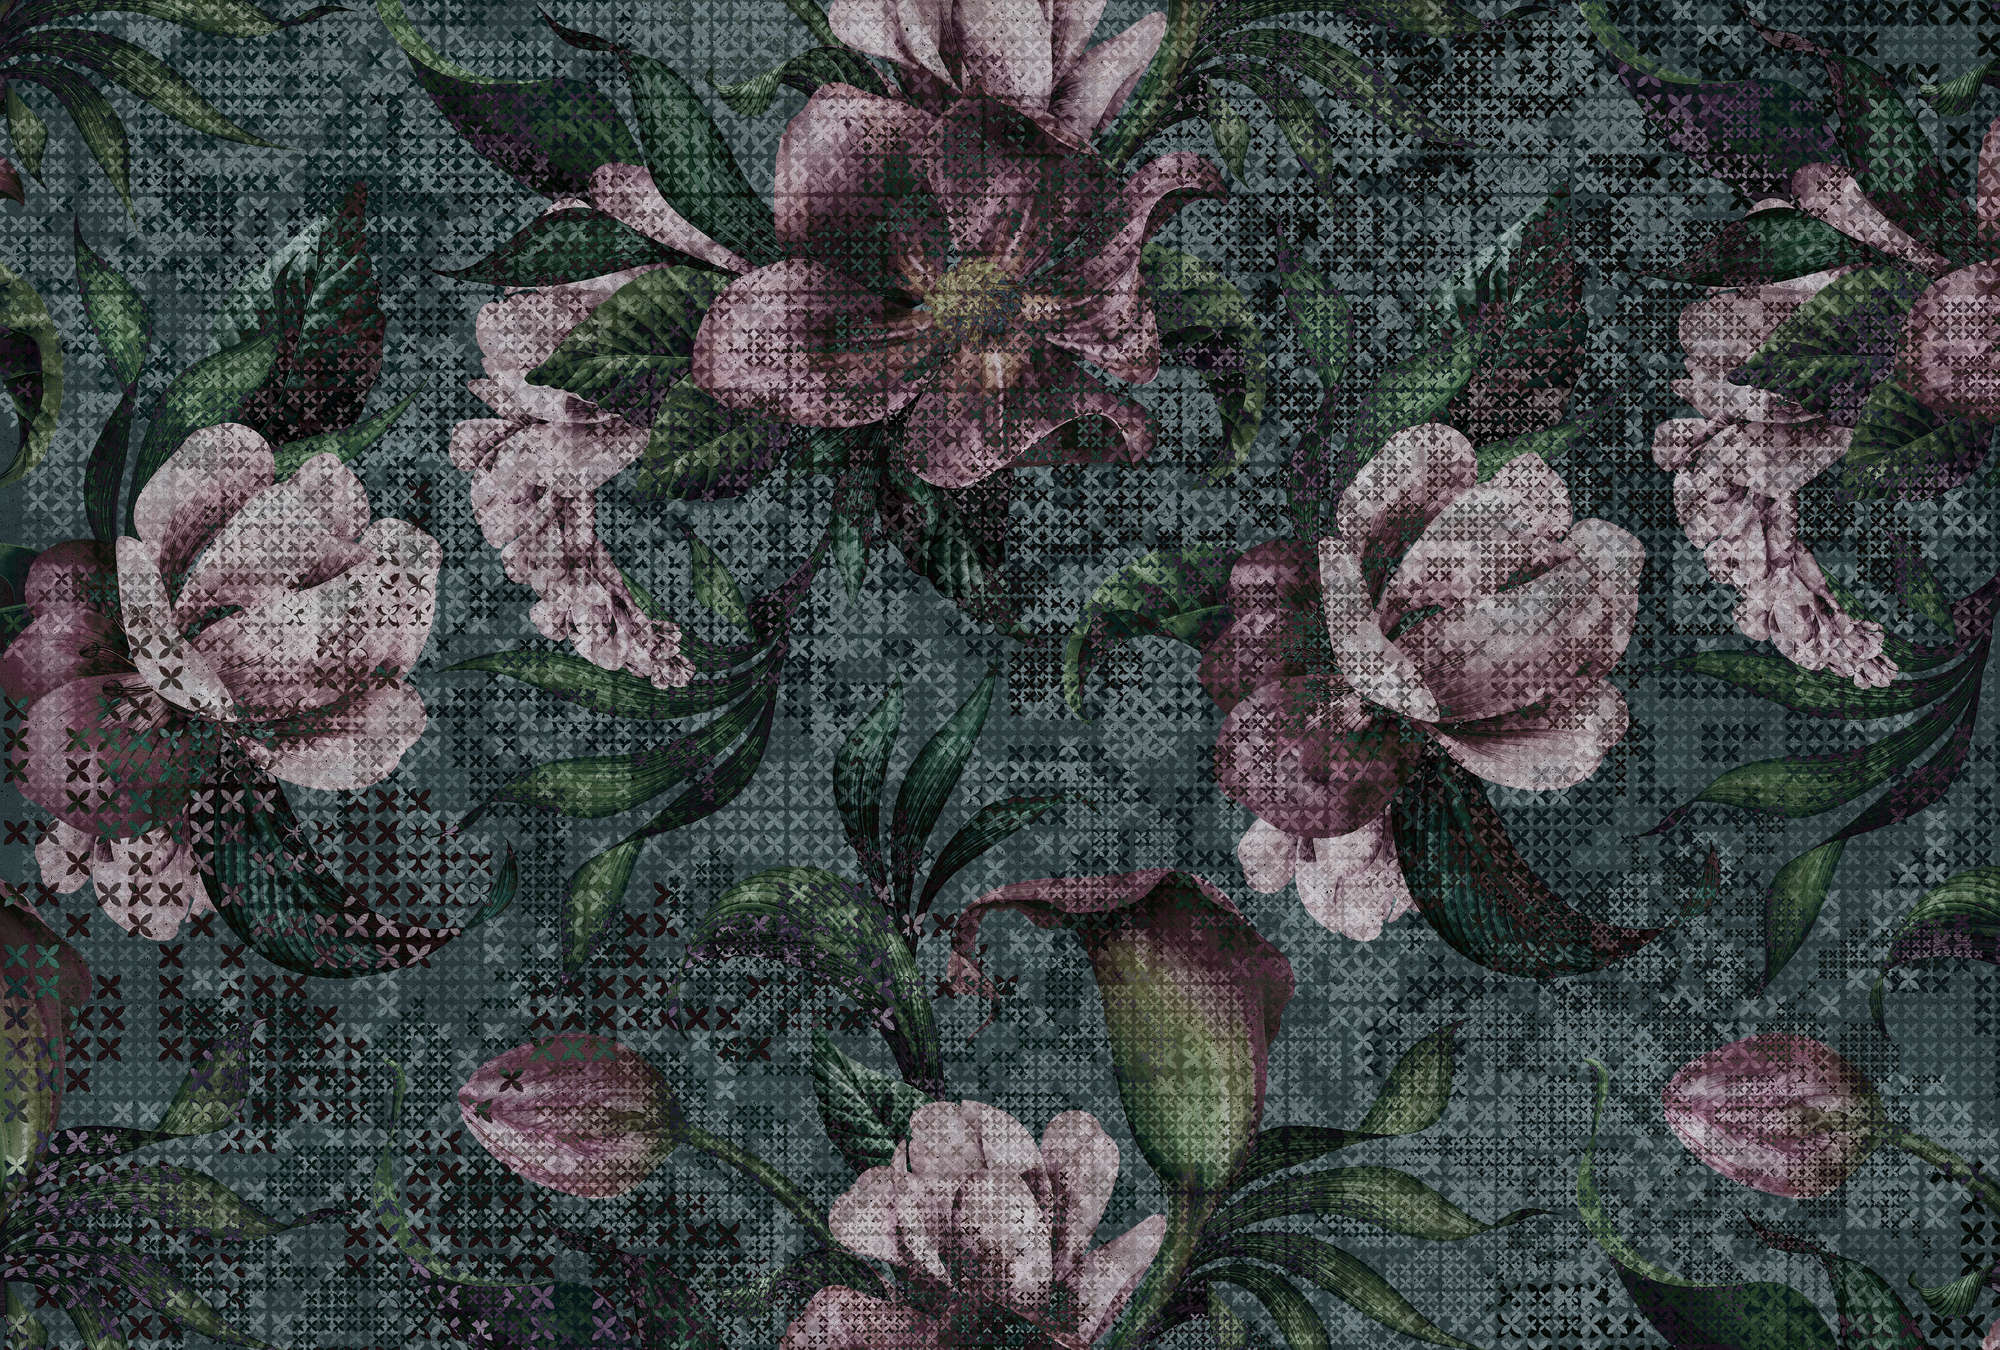             Papier peint fleuri Pixel Design - Vert, Rose
        